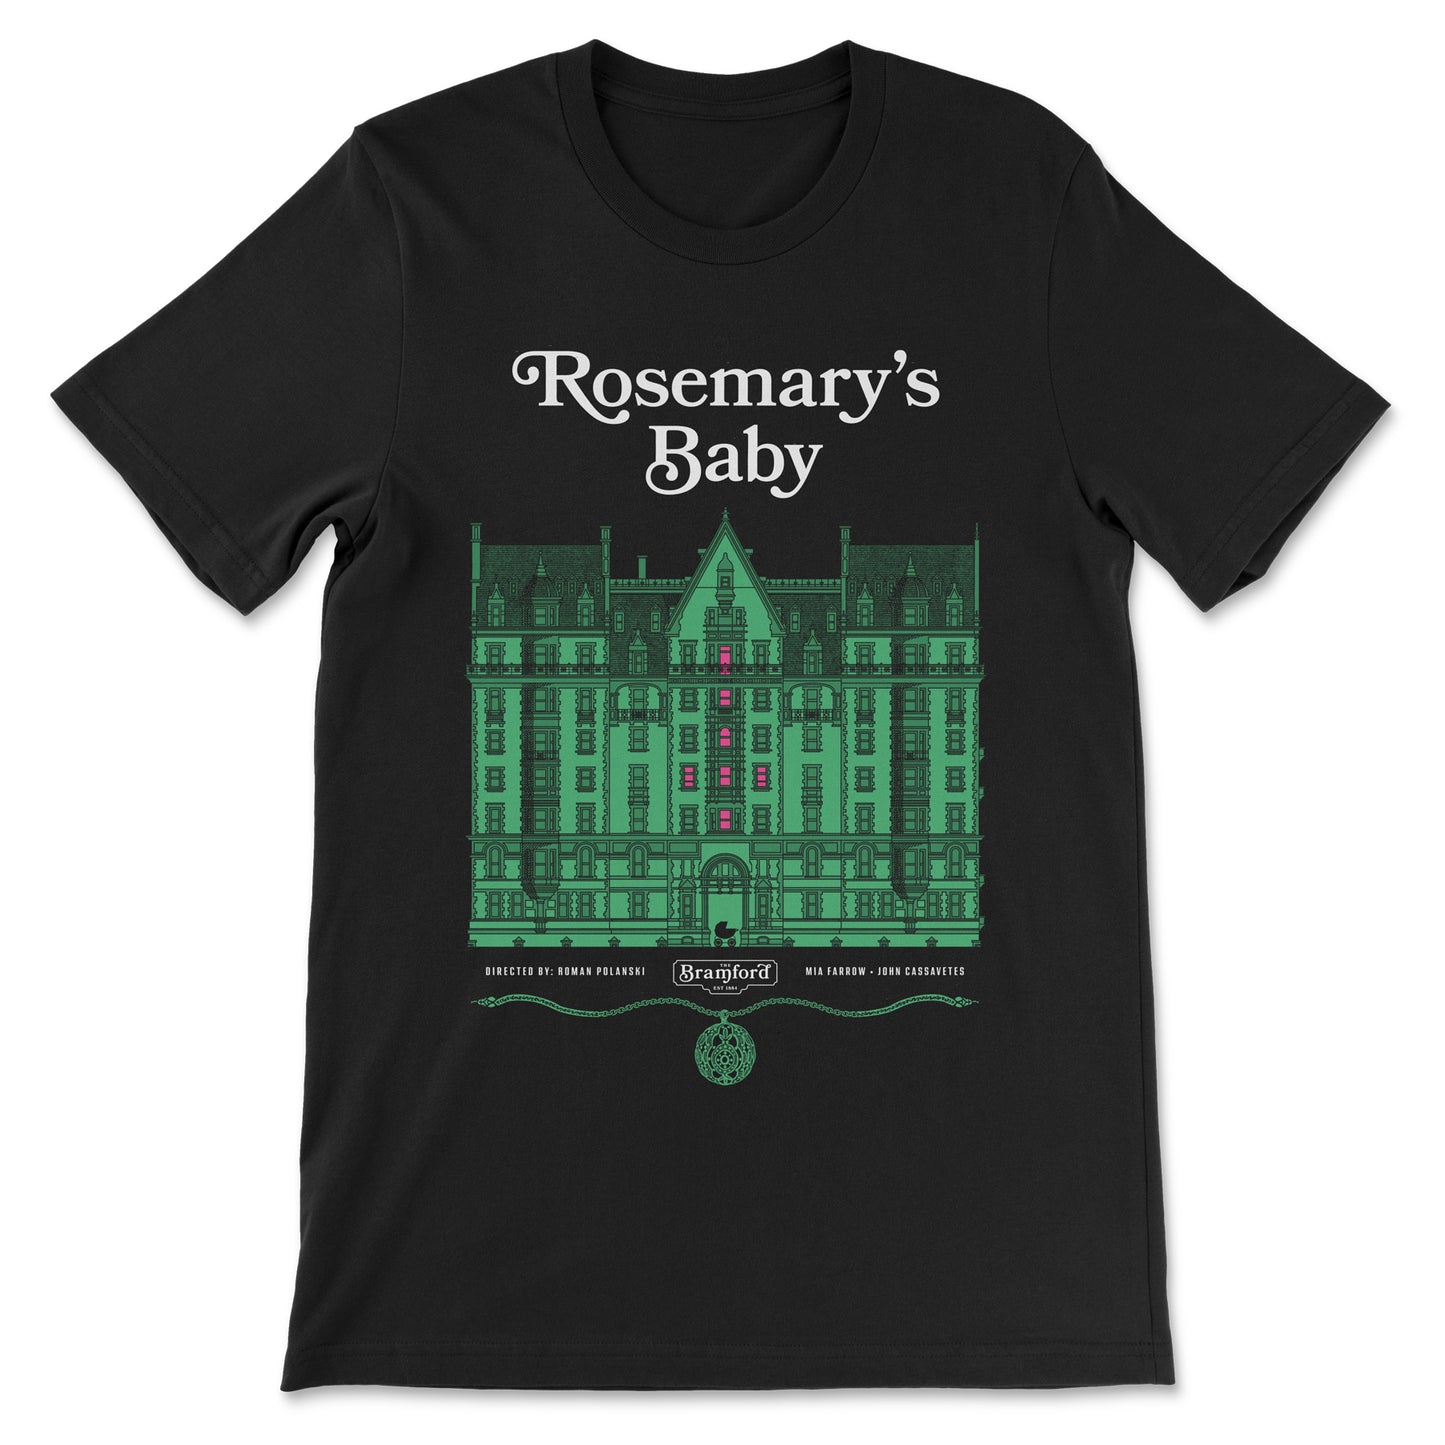 Rosemary's Baby Tee